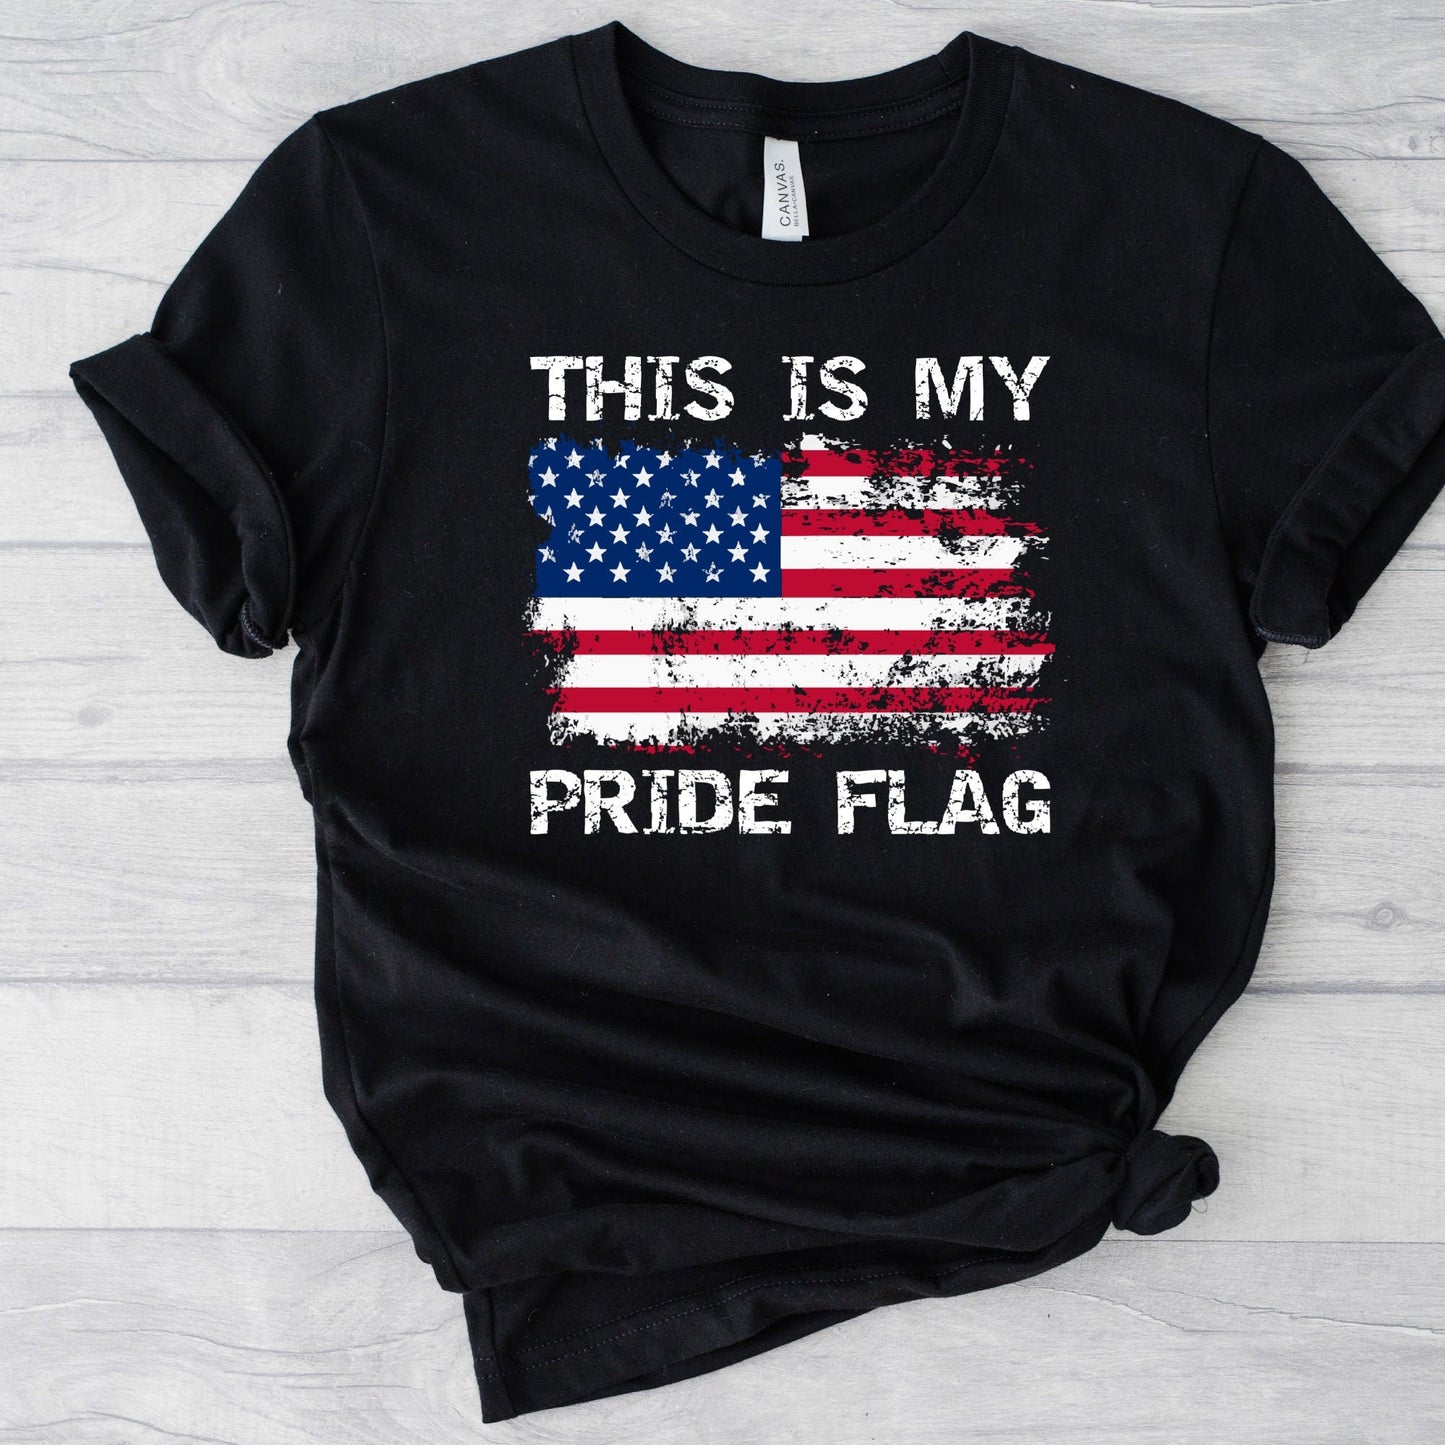 This Is My Pride Flag Shirt Christian hoodies Jesus Shirt Faith Pray J ...